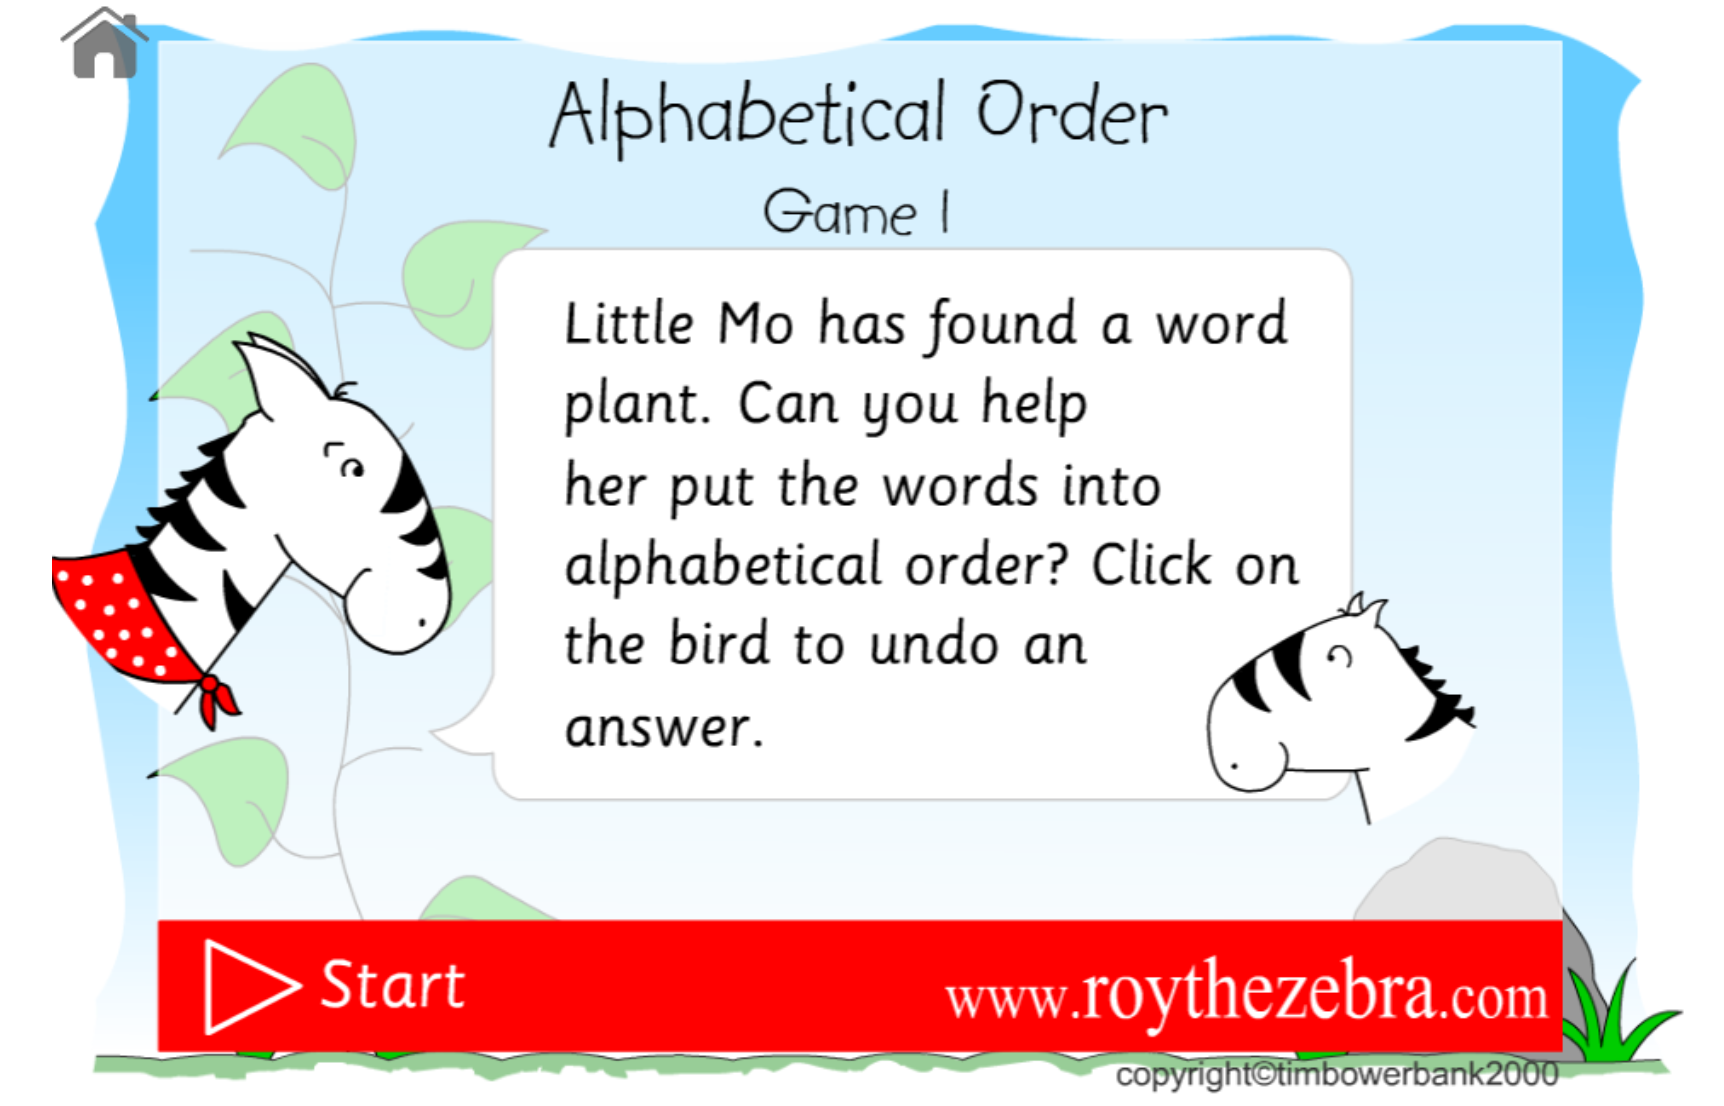 Alphabetical Order Game